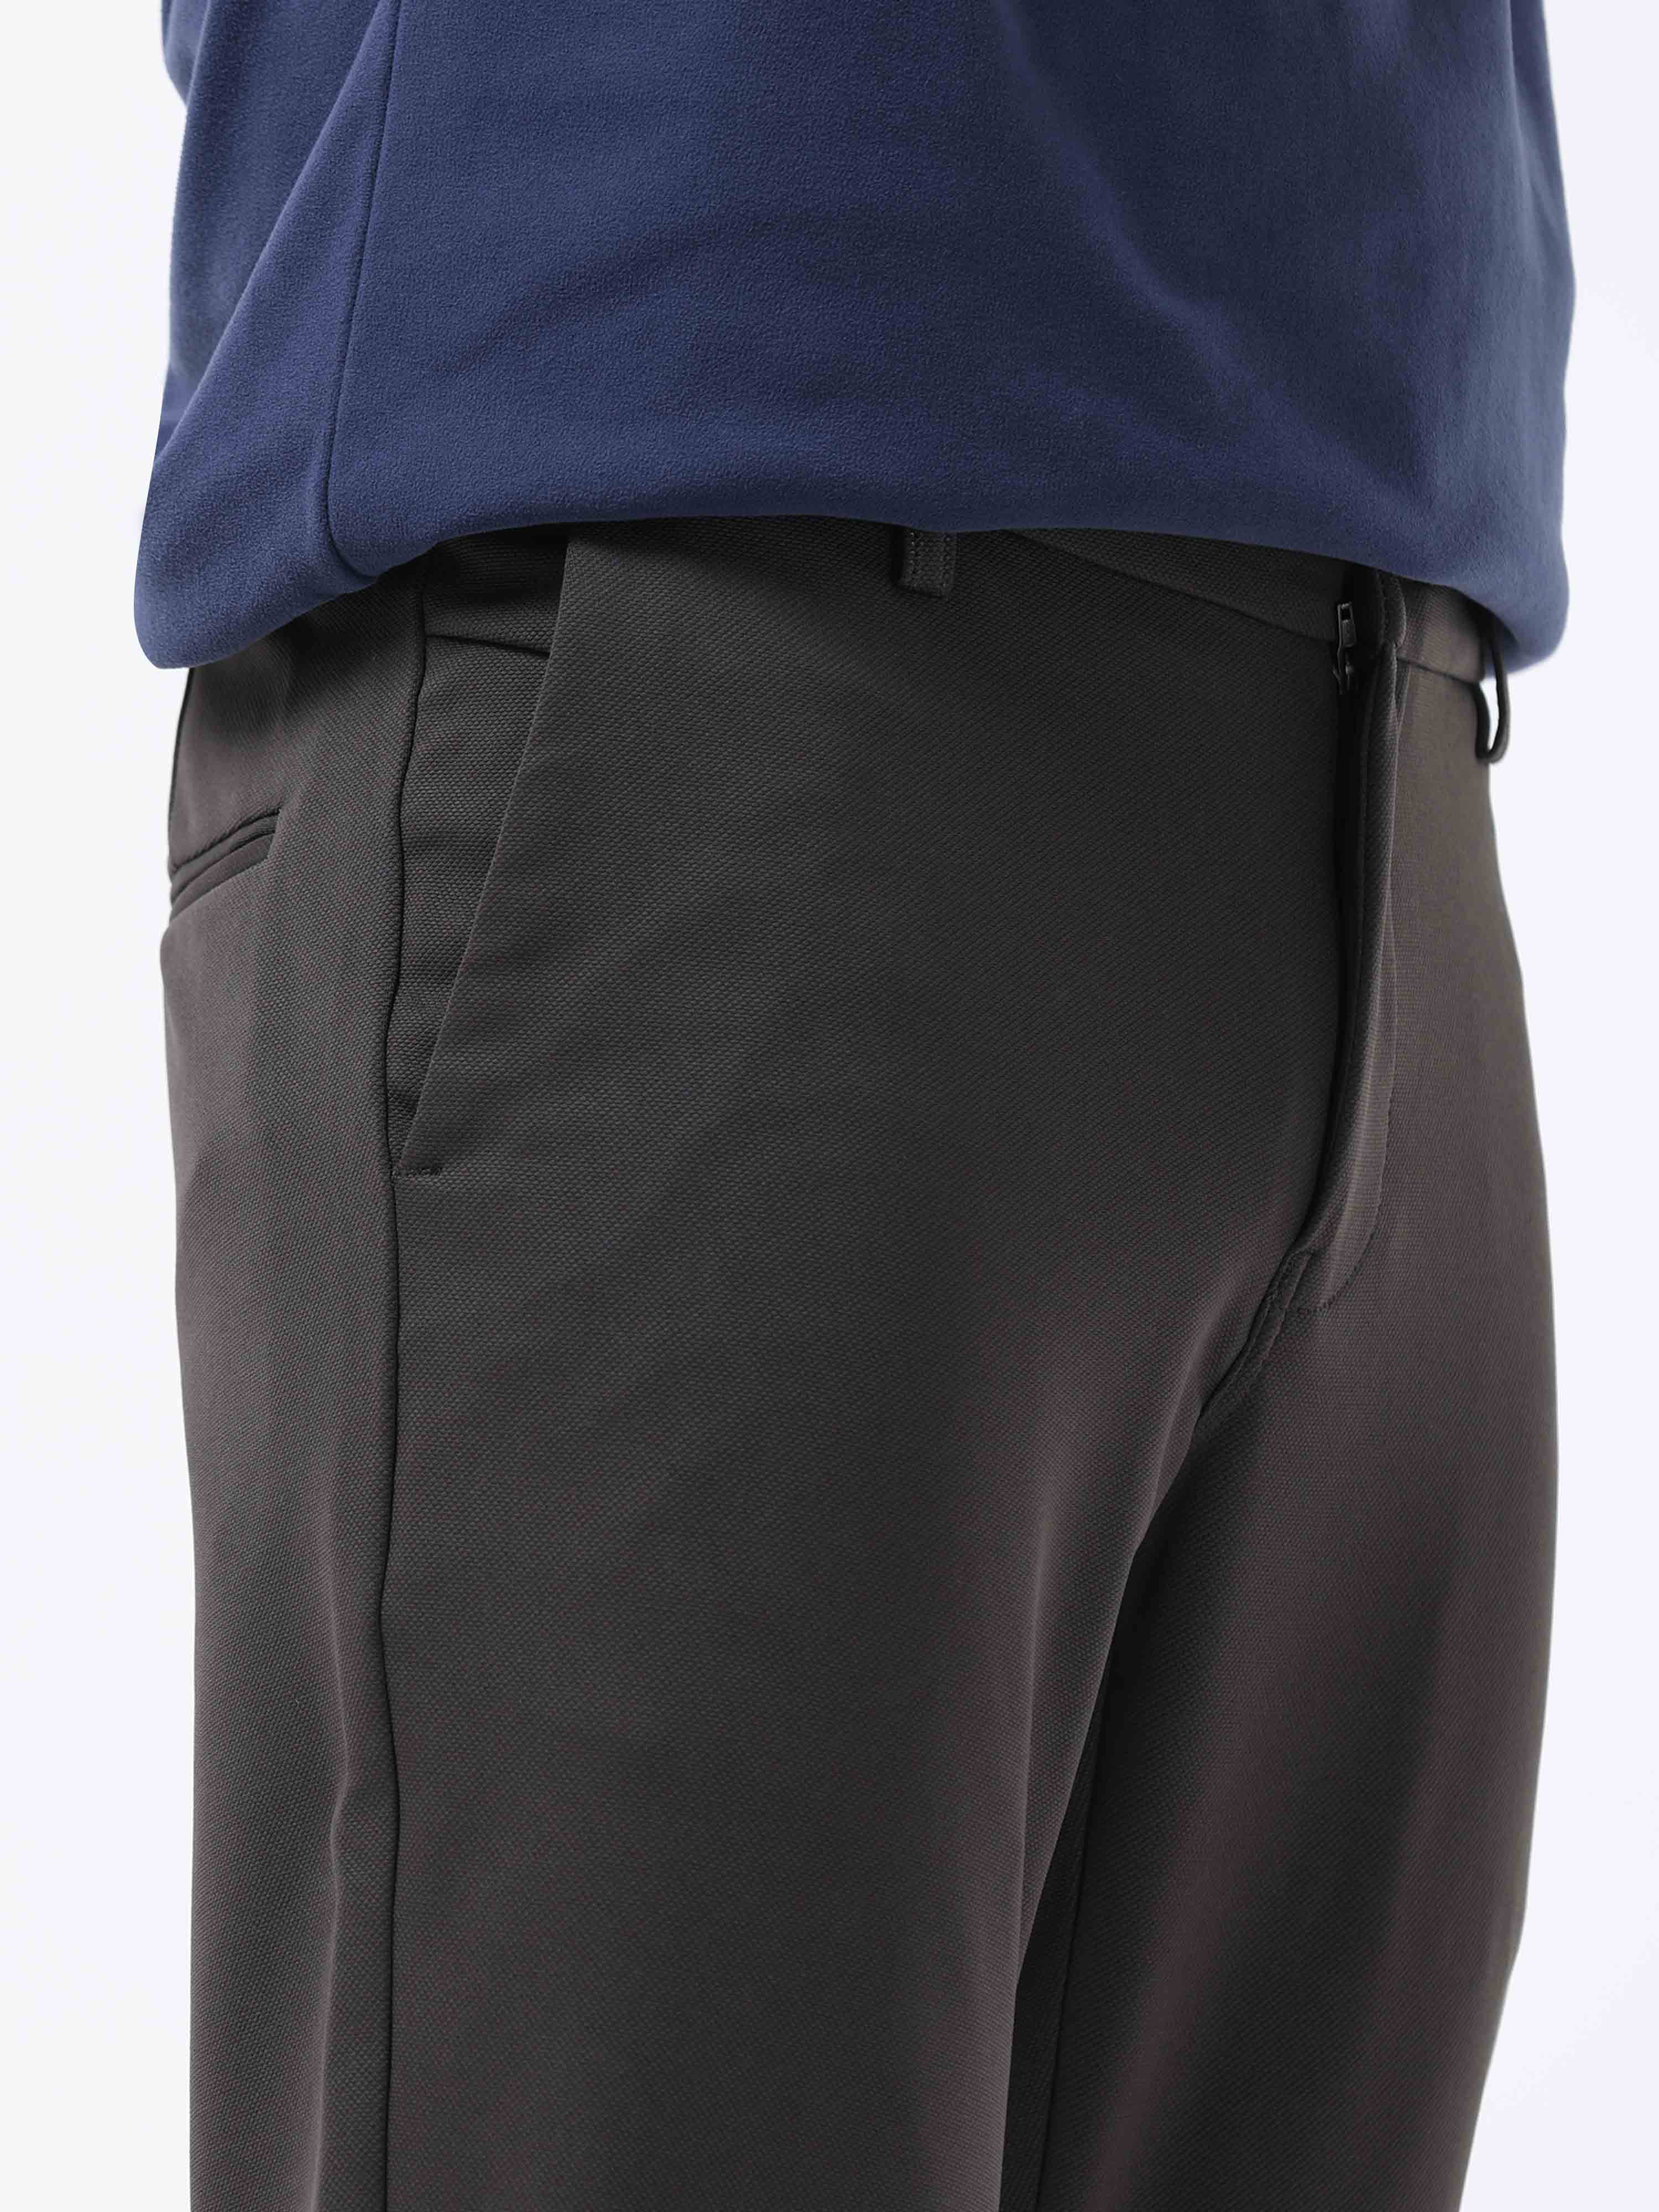 Buy Ocean Blue Power Stretch Pants For Men Online In India